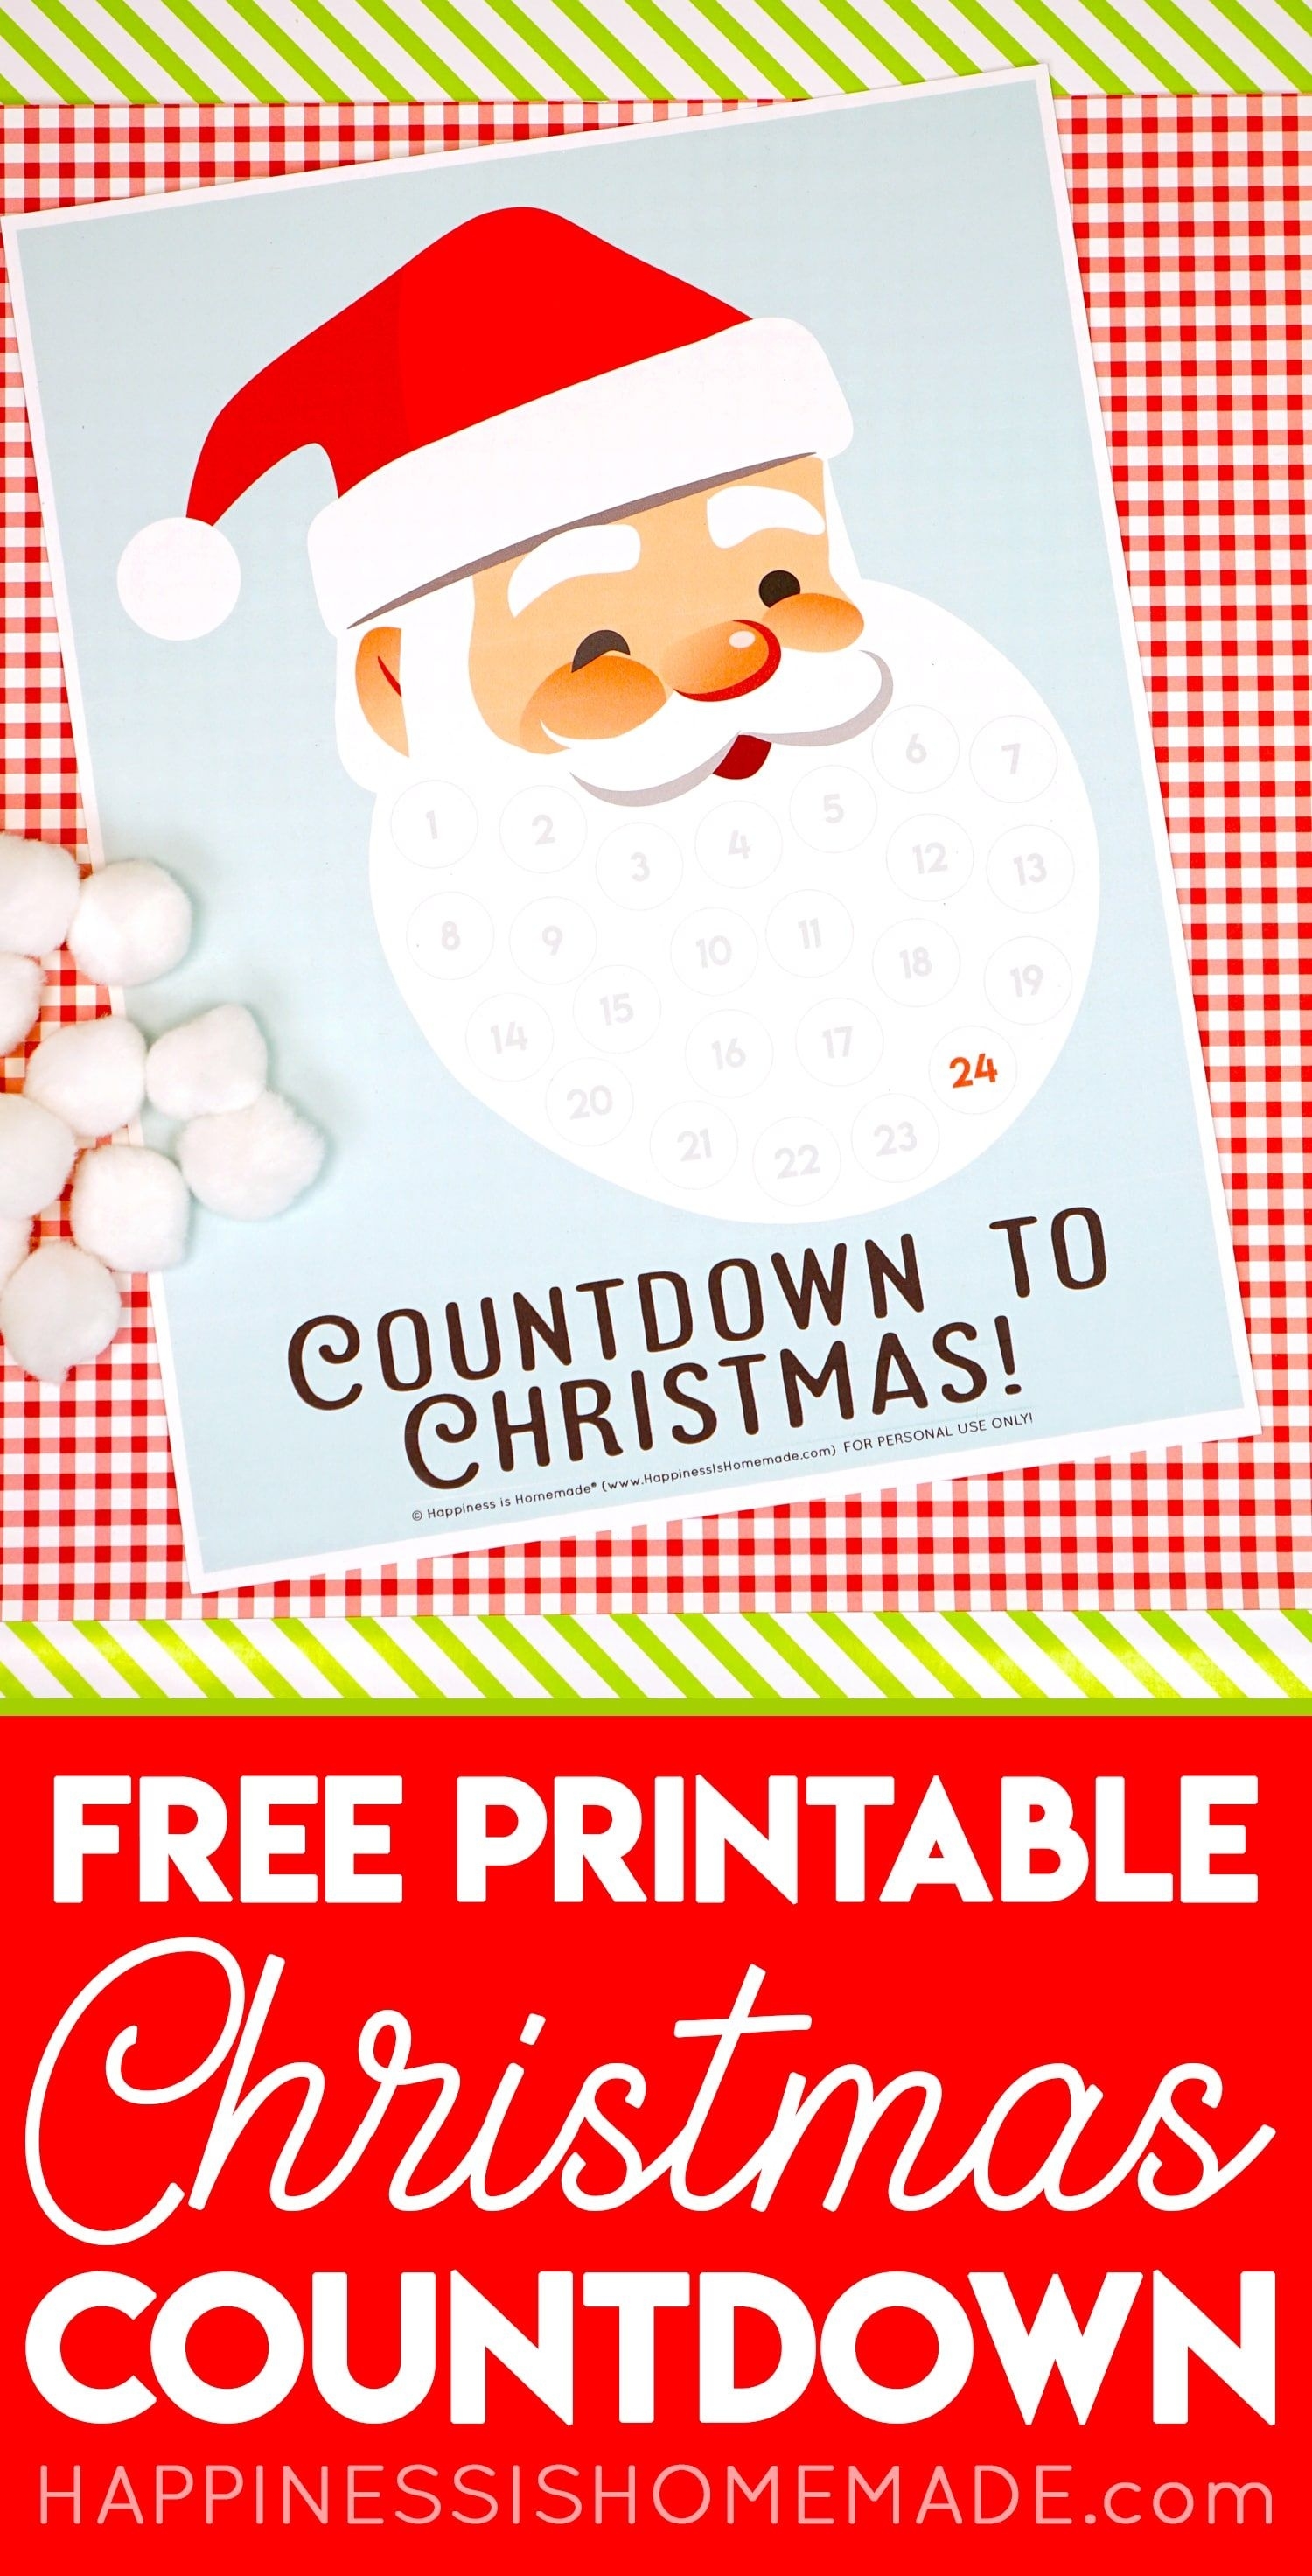 Christmas Countdown Calendar: Get The Whole Family Ready For Free Printable Christmas Countdown Calendar